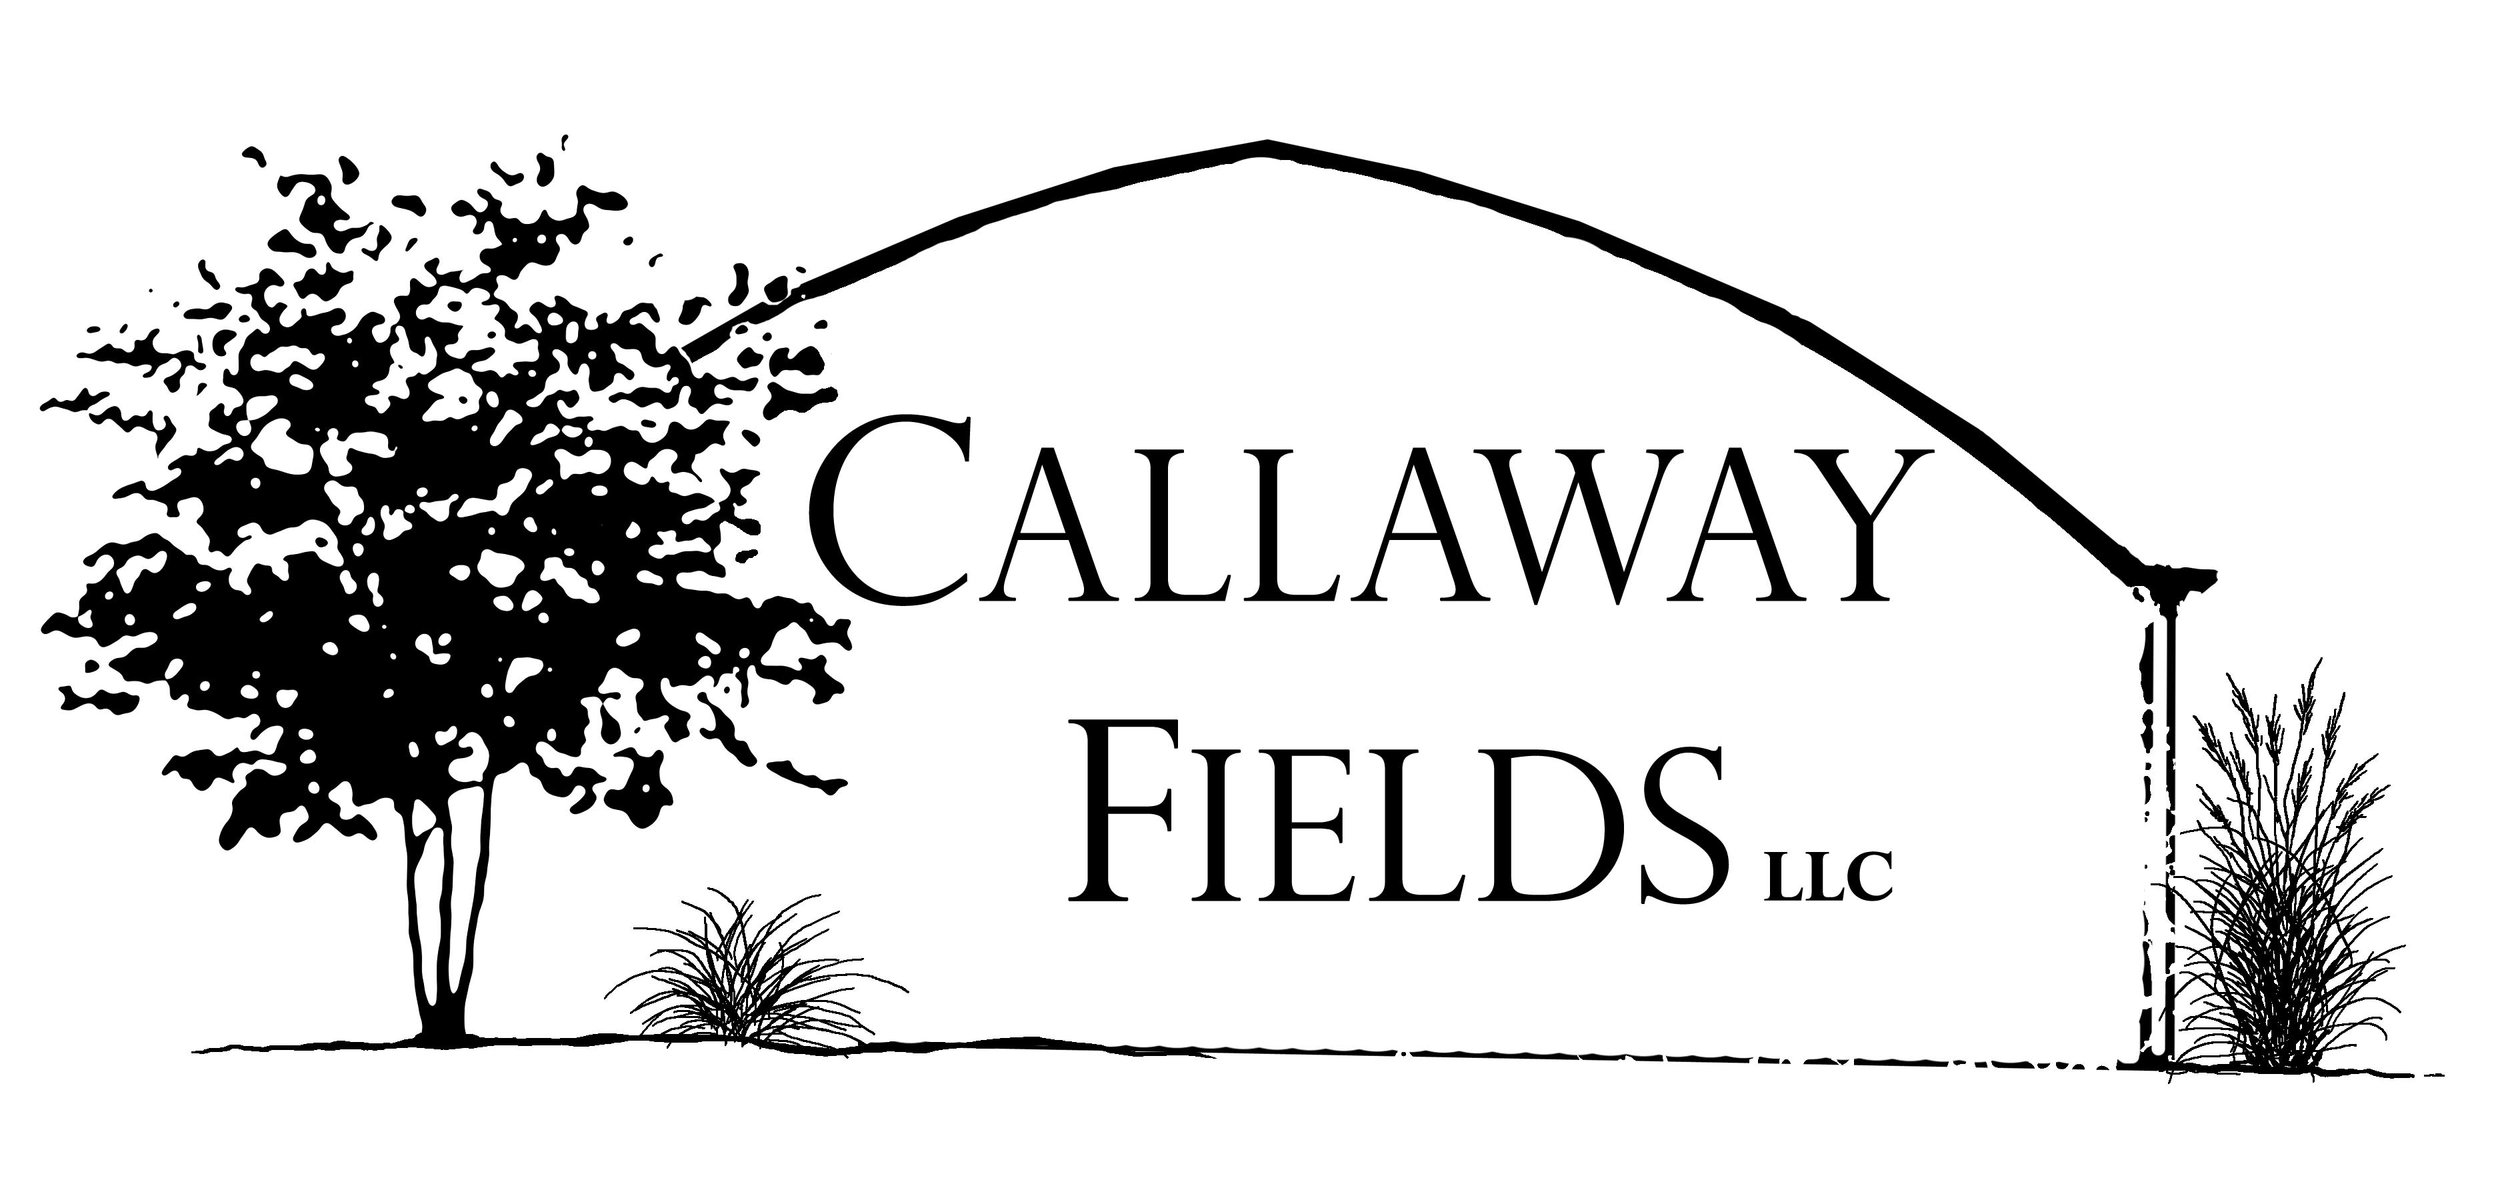 Callaway Fields, Llc